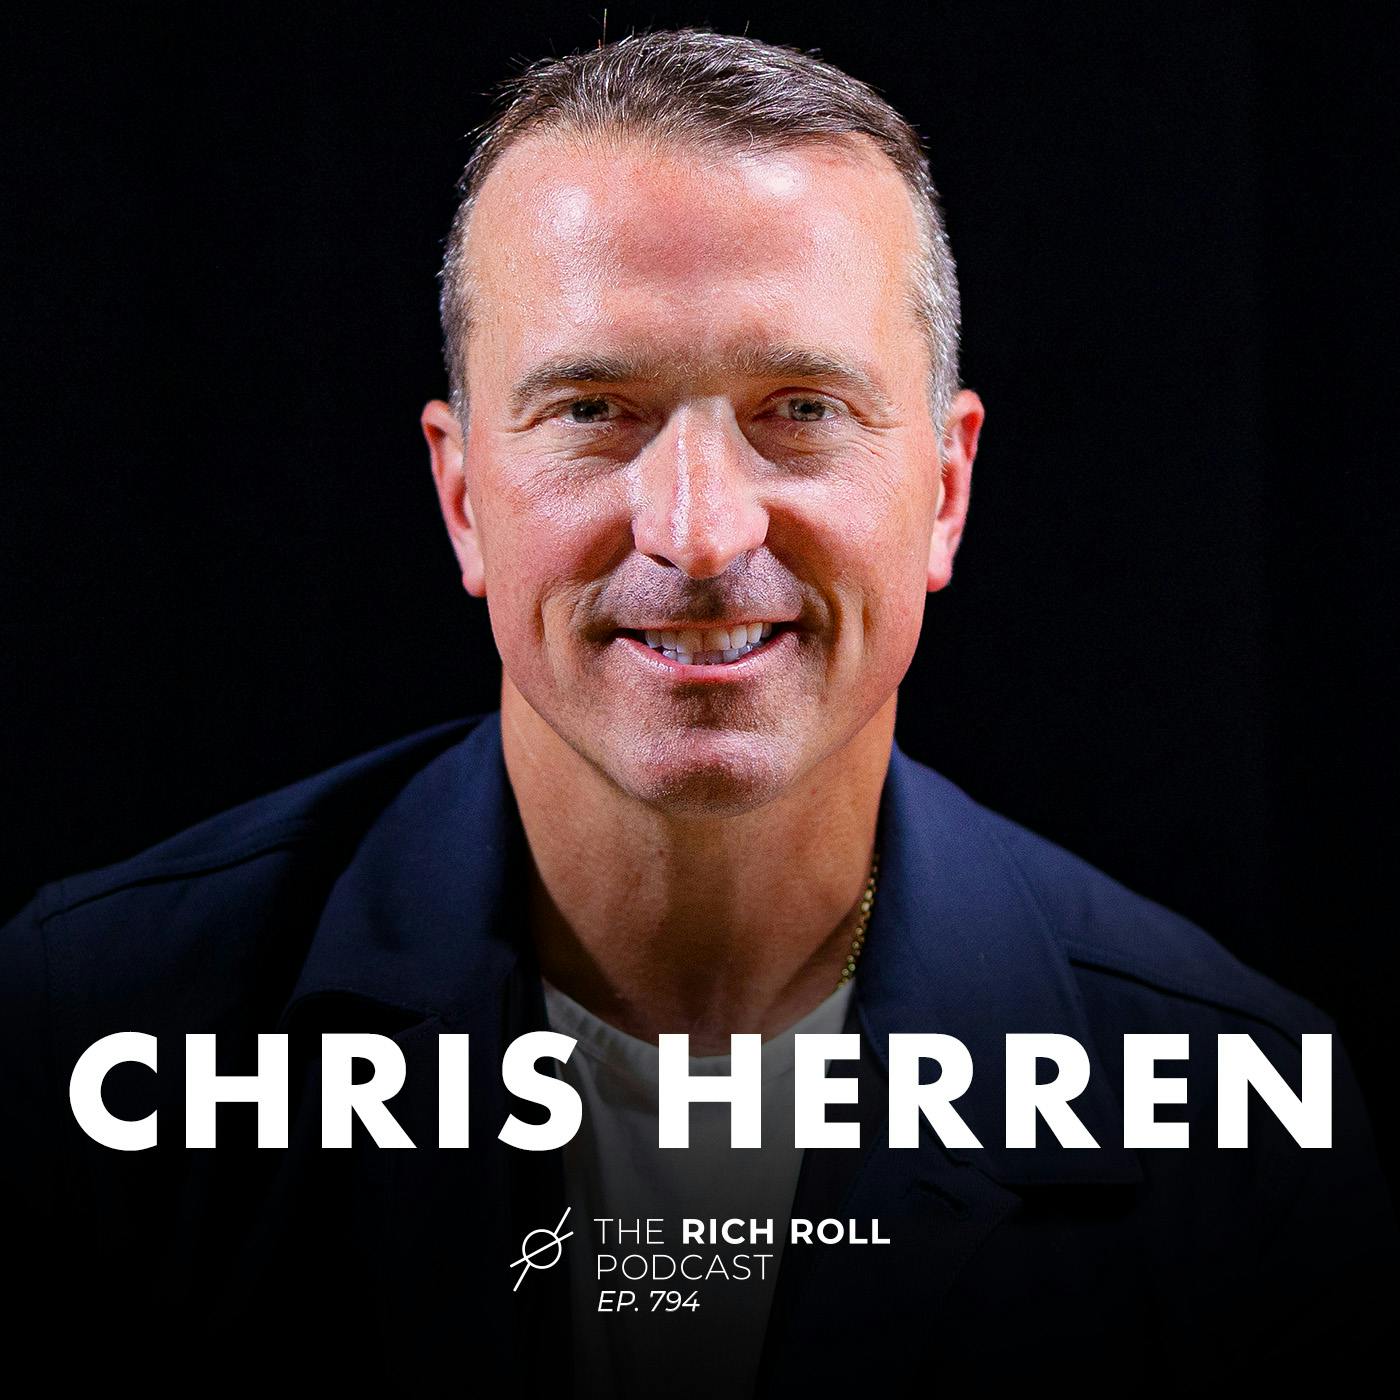 Against All Hope: Former NBA Star Chris Herren on Addiction, Sobriety & Service